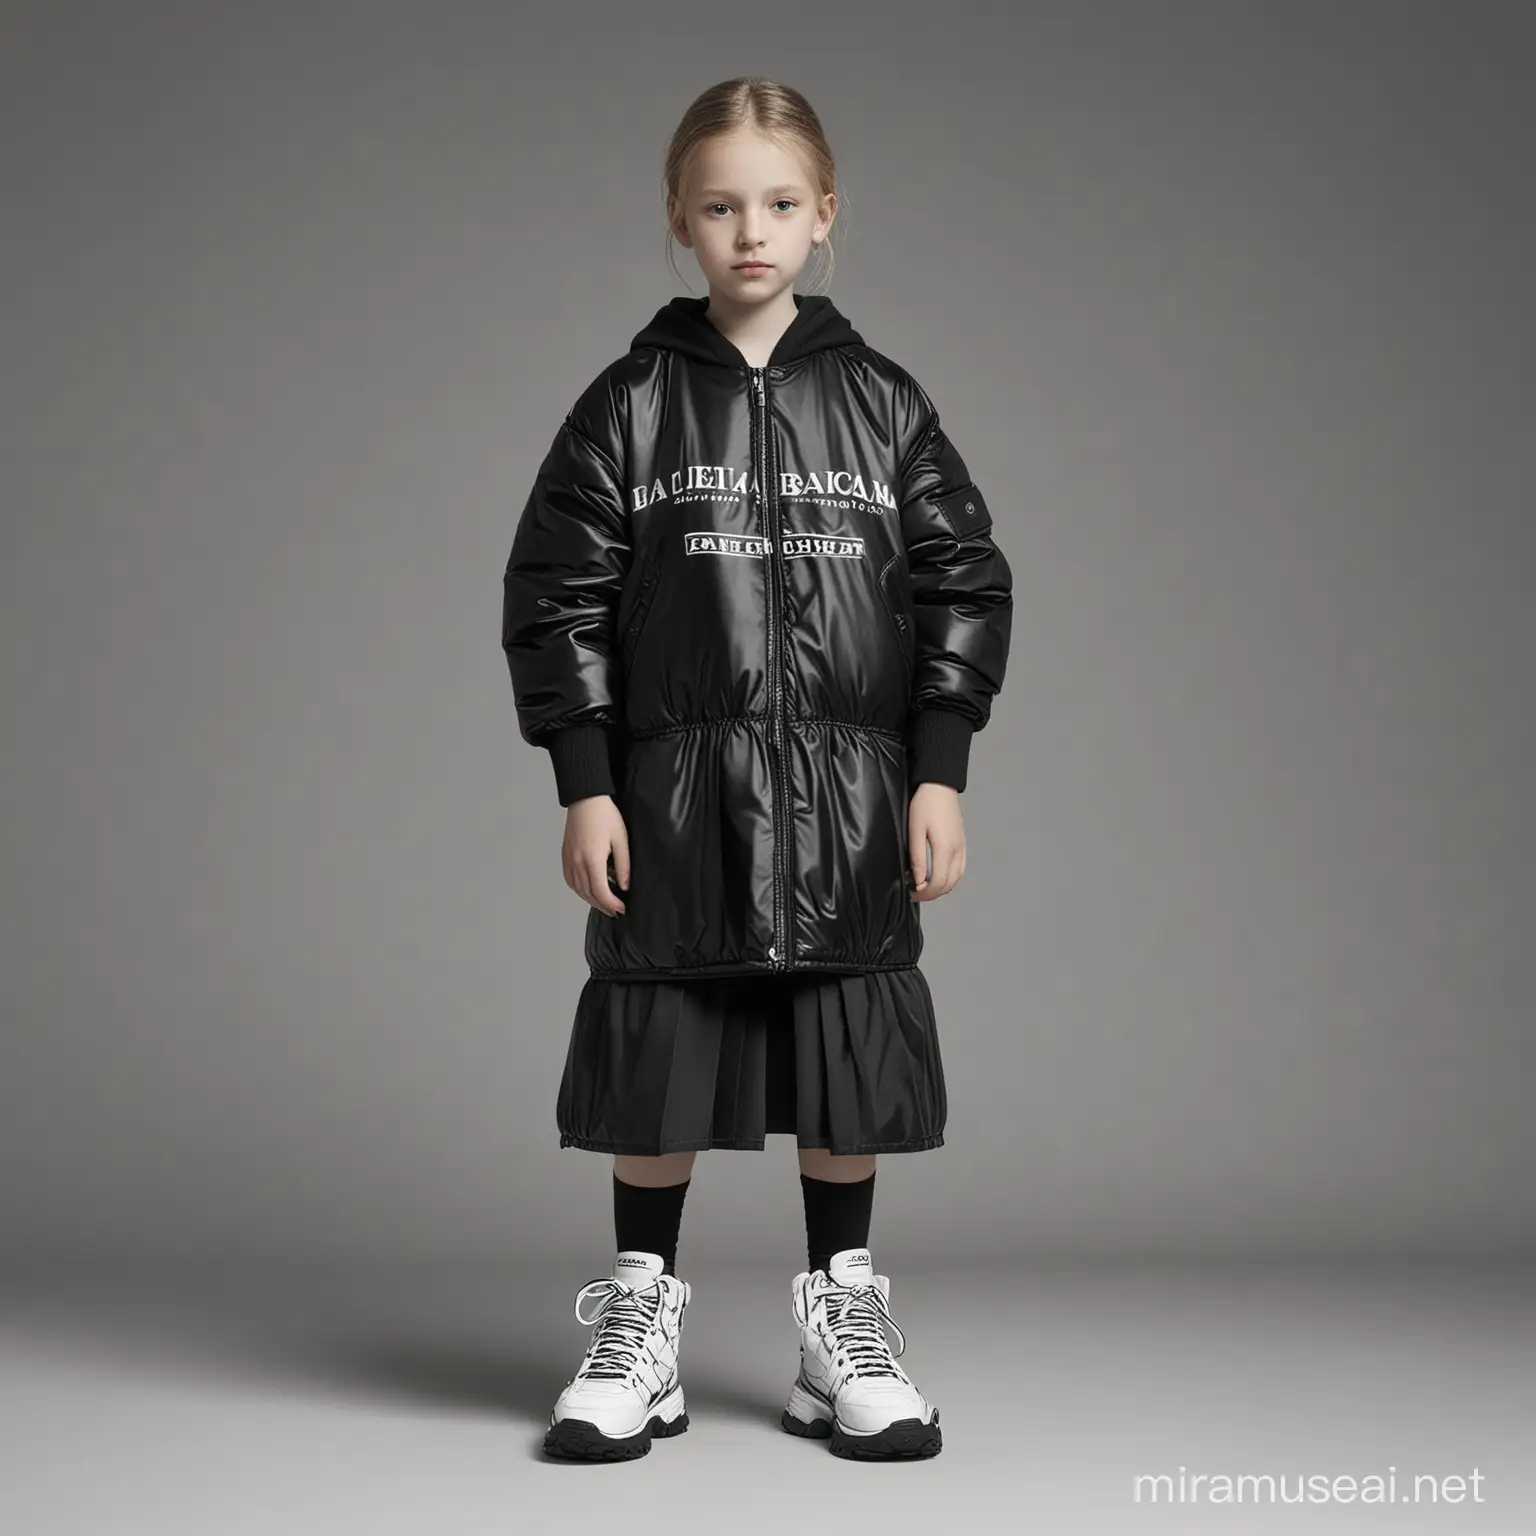 Balenciaga x UNICEF Collaboration Responsible Fashion and Child Protection